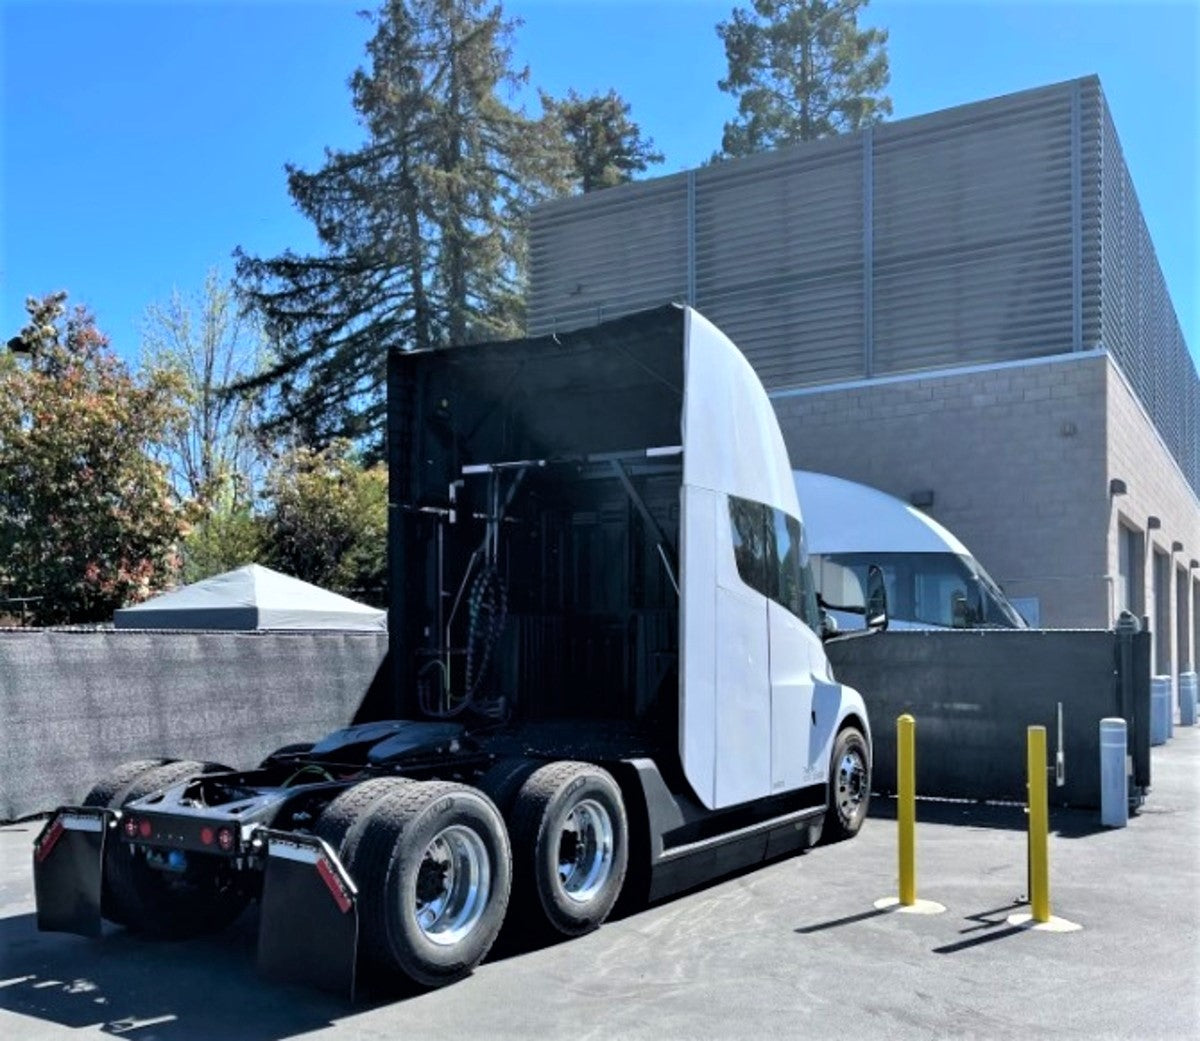 Two Tesla Semis Spotted in Palo Alto, CA